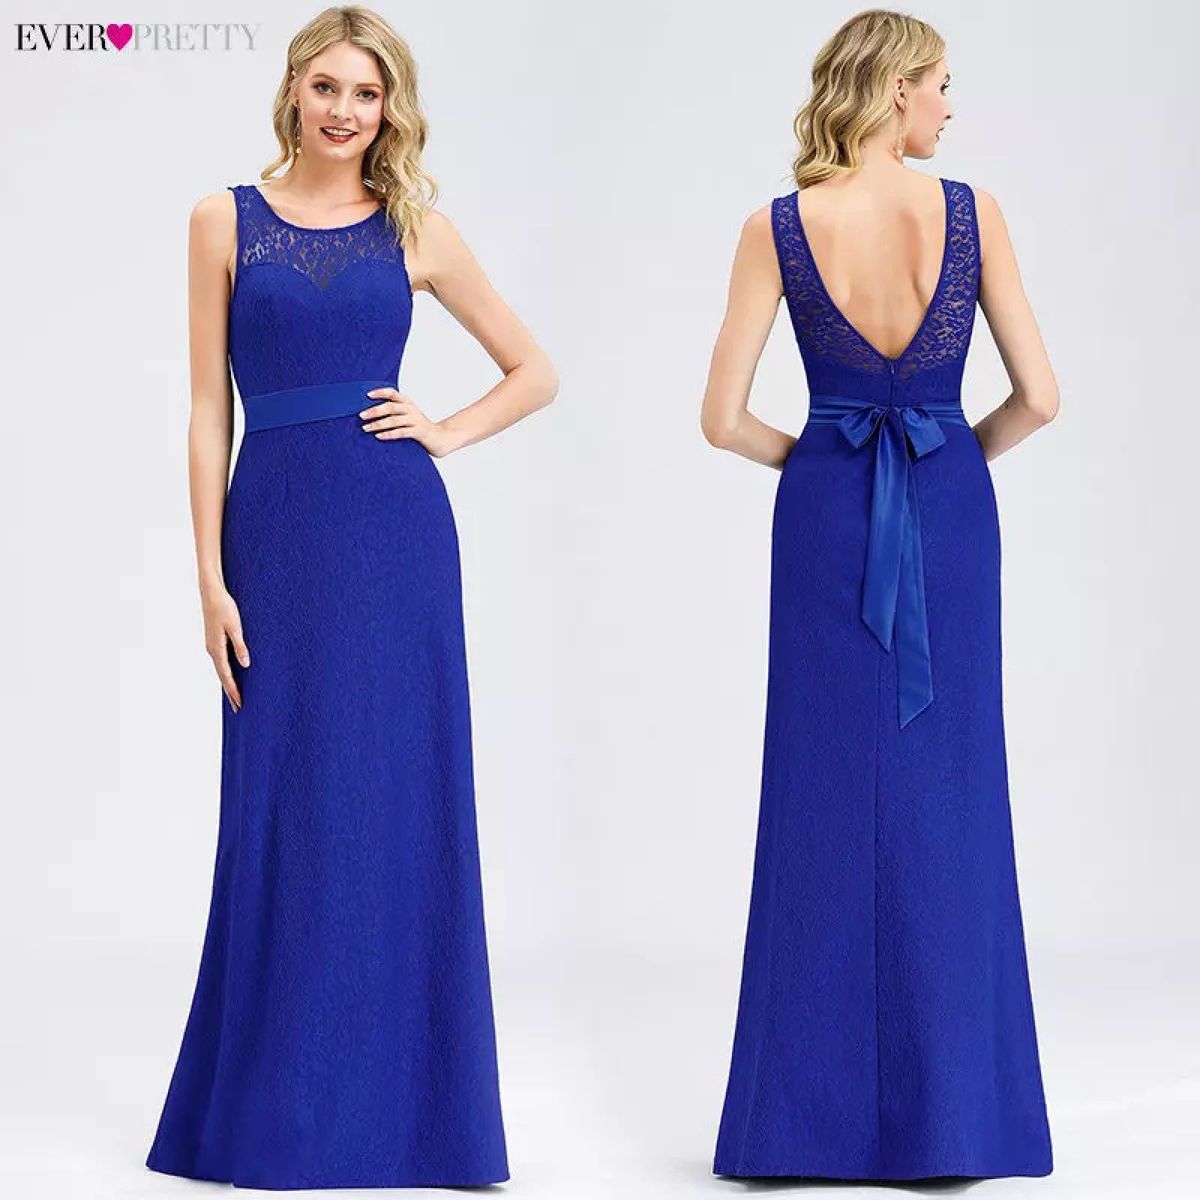 vestido longo renda azul turquesa